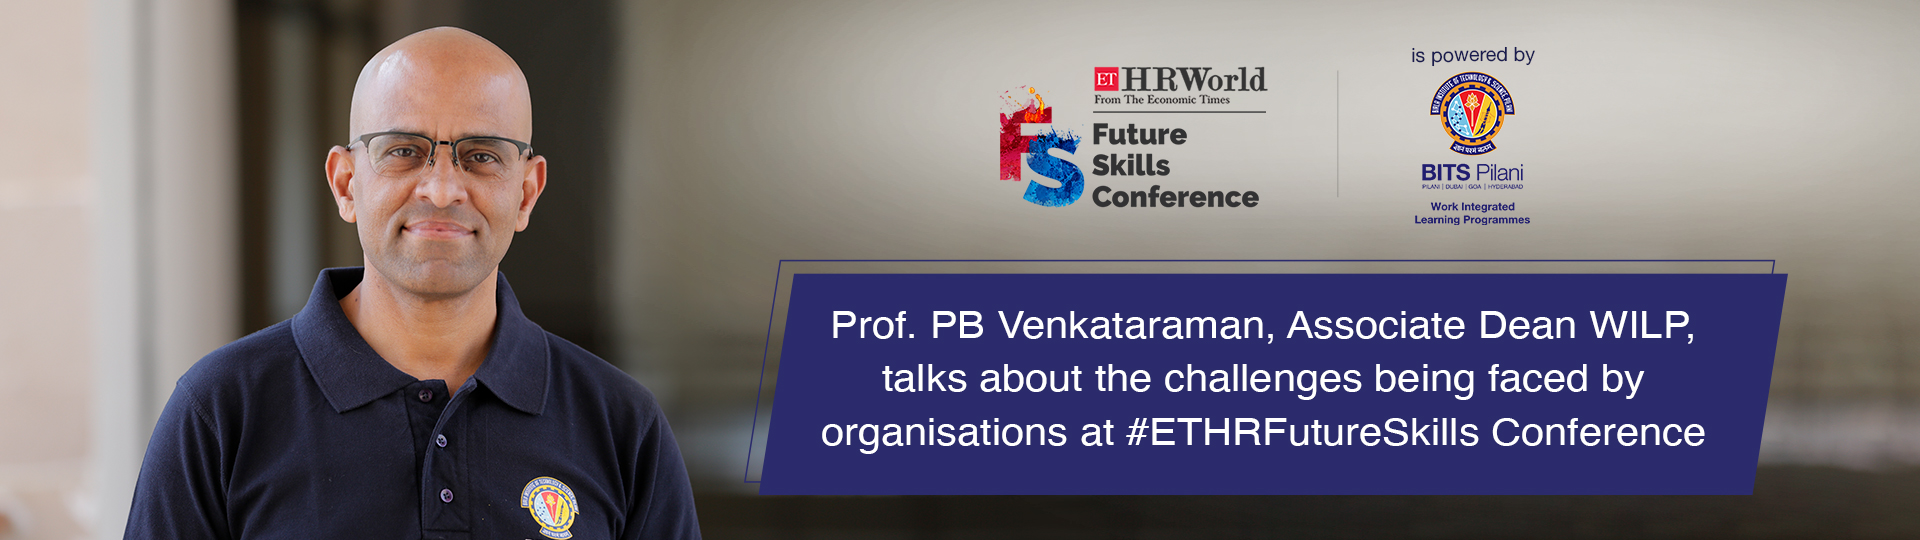 Prof. PB Venkataraman, Associate Dean WILP, talks about the challenges being faced by organisations